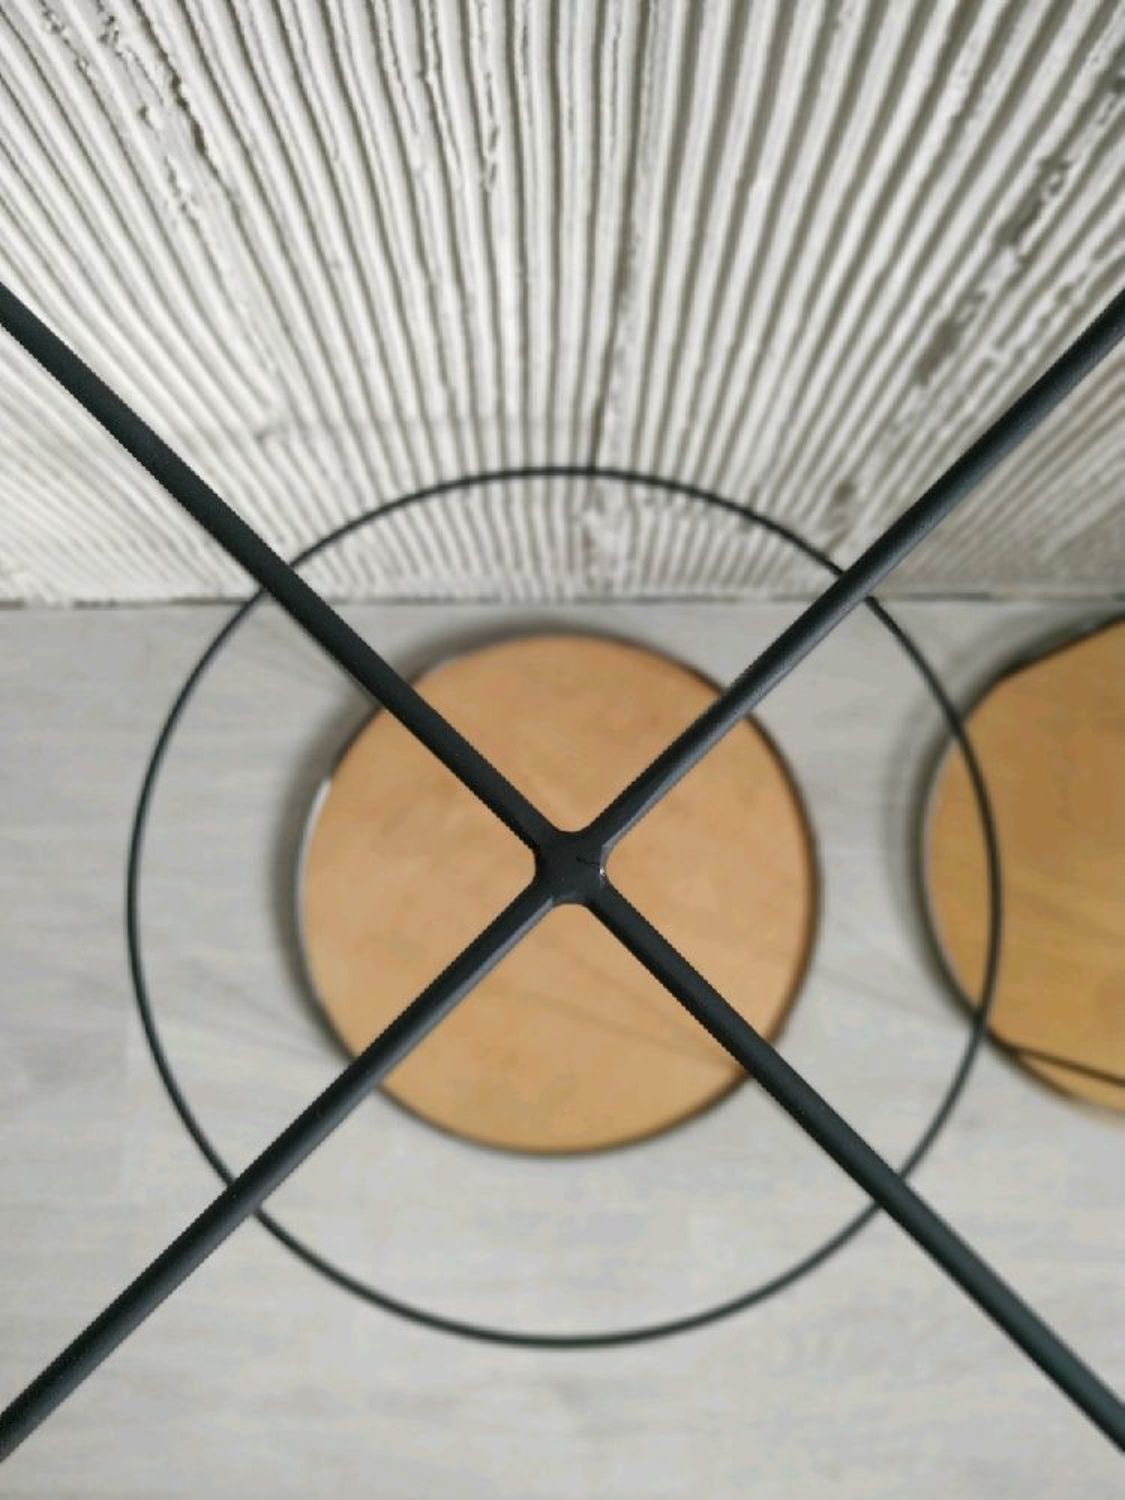 Фото №2 к отзыву покупателя Hygge Home Basket о товаре Каркас для абажура. Металлический каркас.